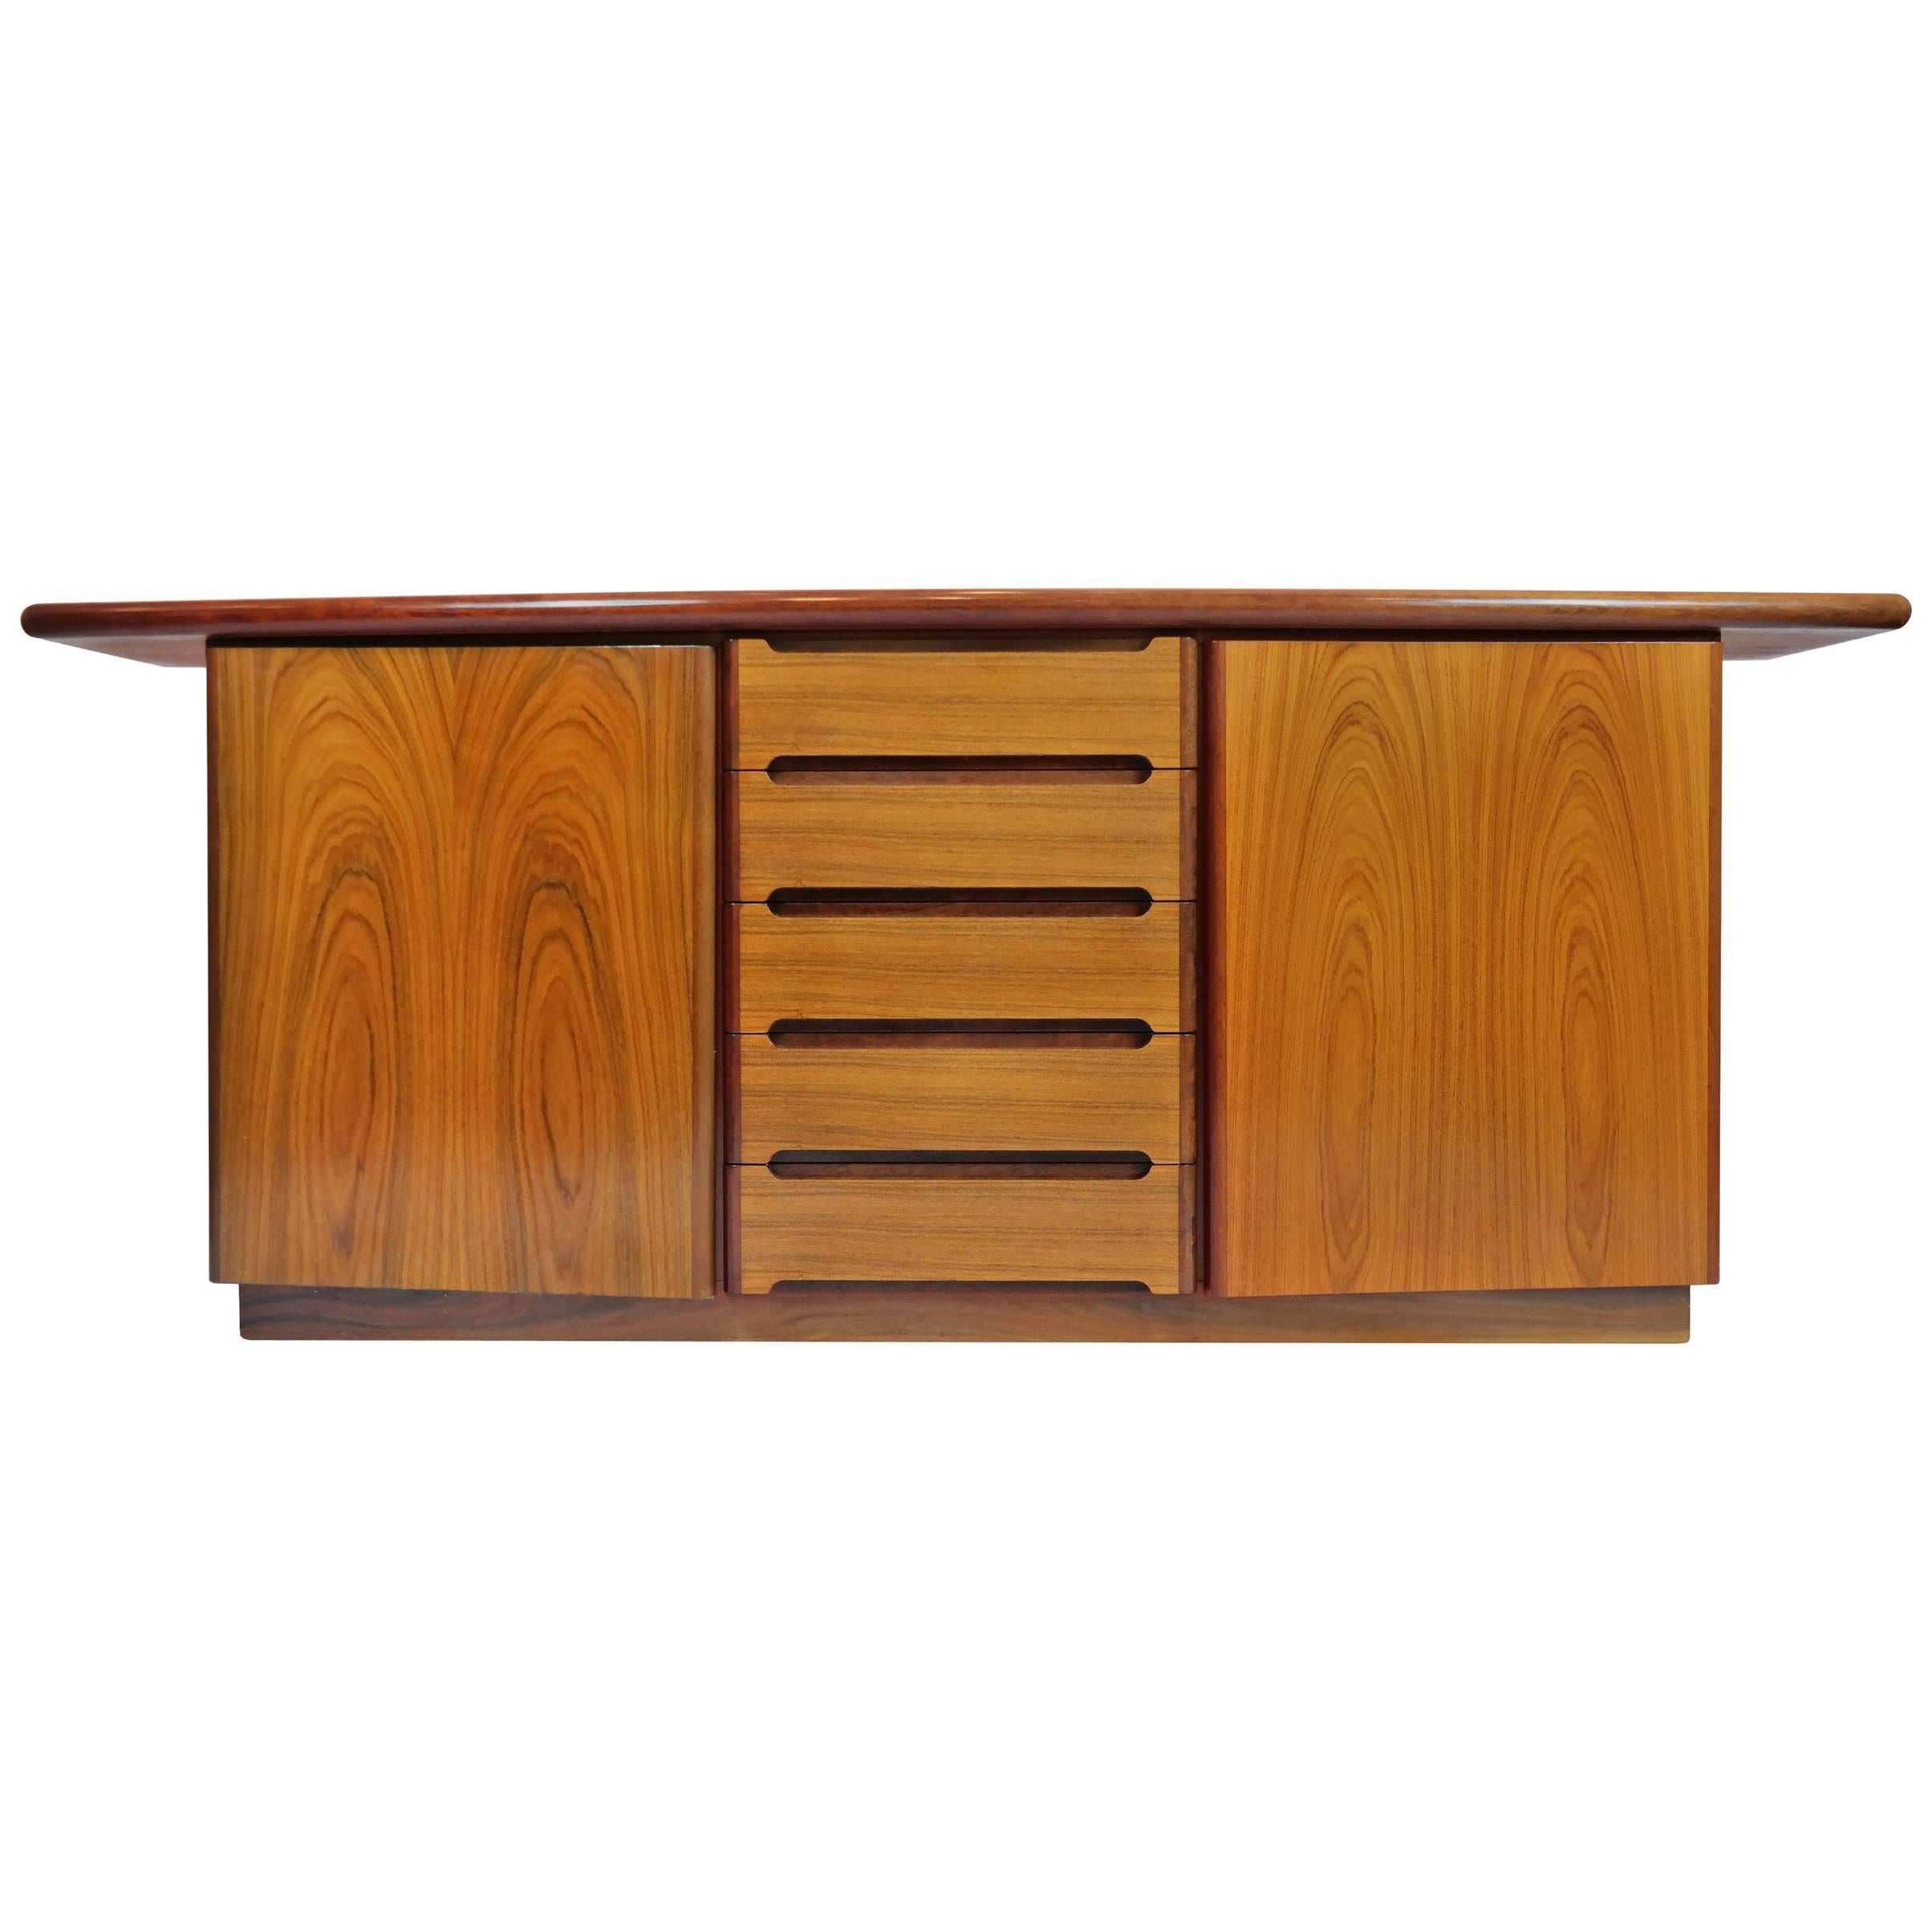 Danish Mid-Century Modern Credenza Sideboard Cabinet by Skovby